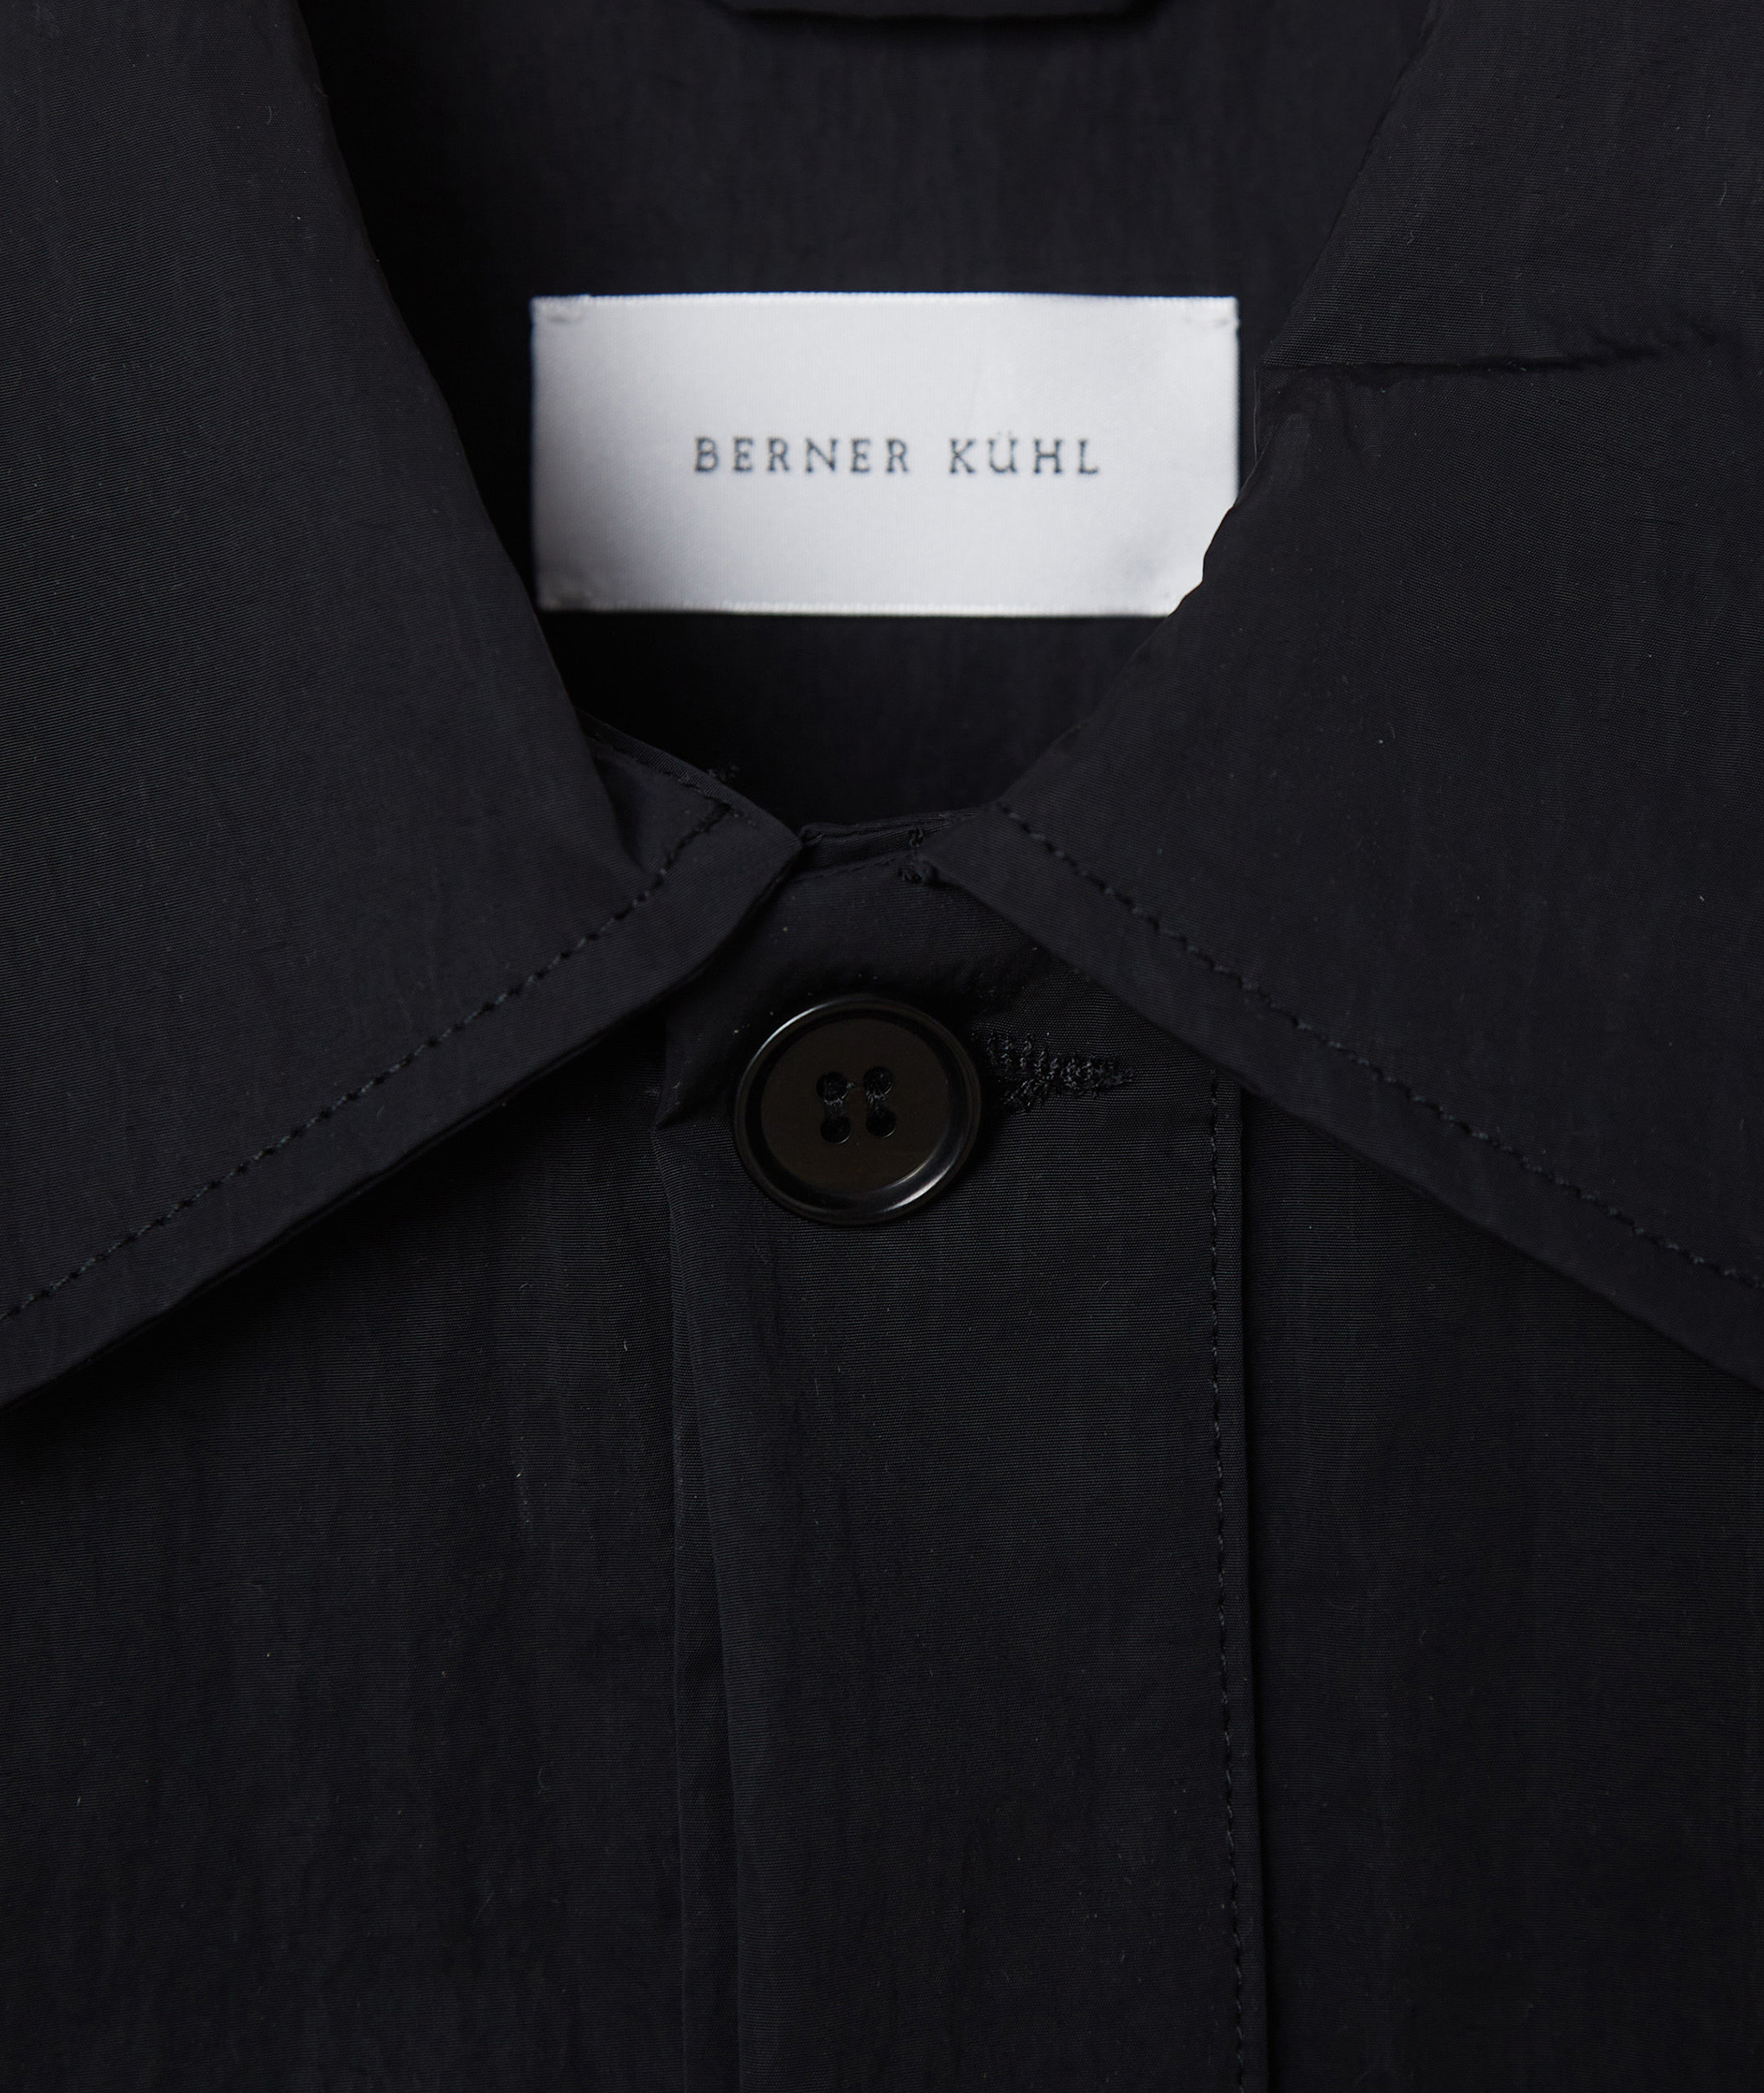 Norse Store | Shipping Worldwide - Berner Kühl Paint Shirt - Black